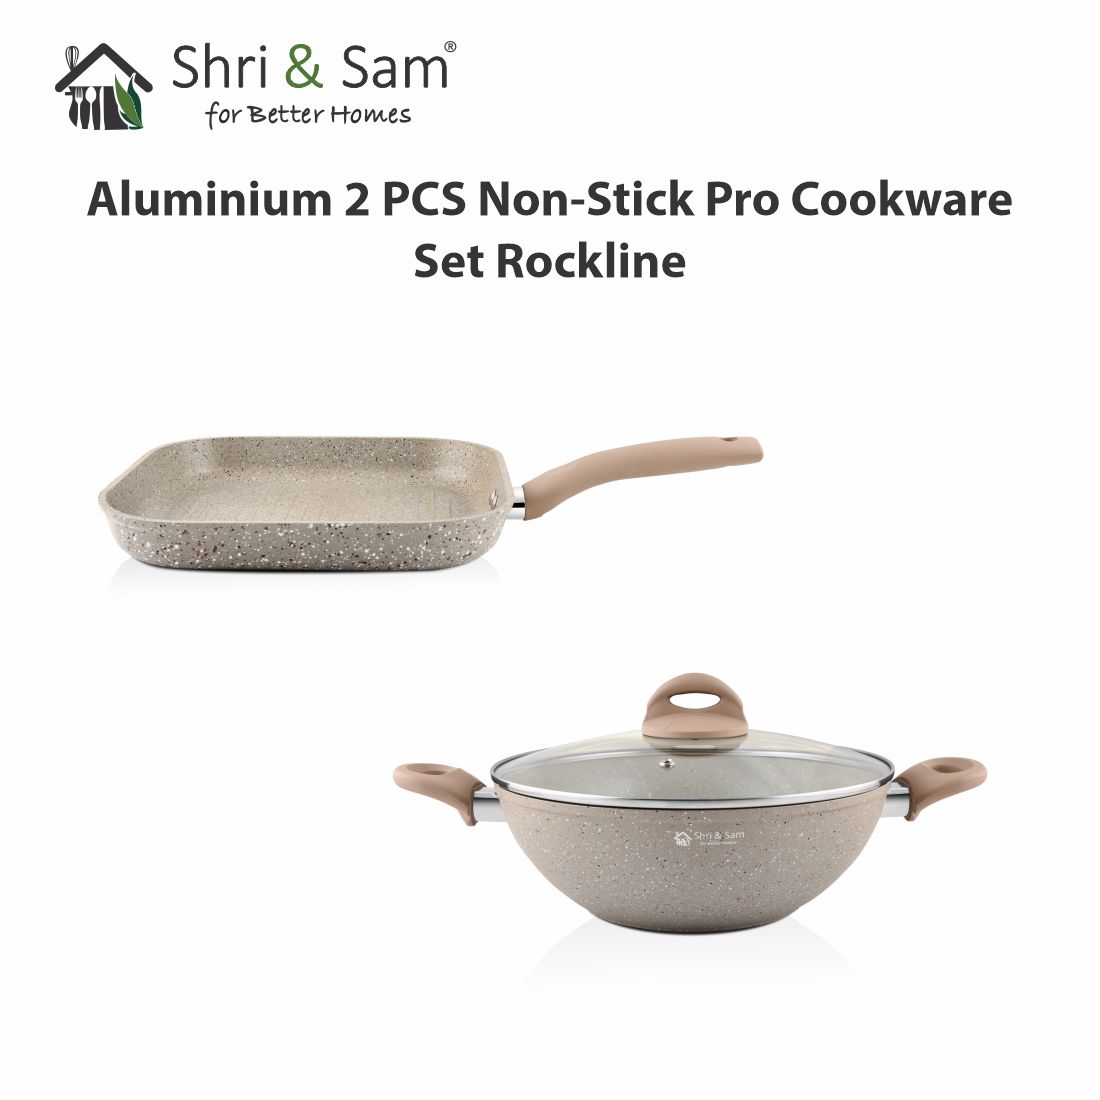 Aluminium 2 PCS Non-Stick Pro Cookware Set Rockline